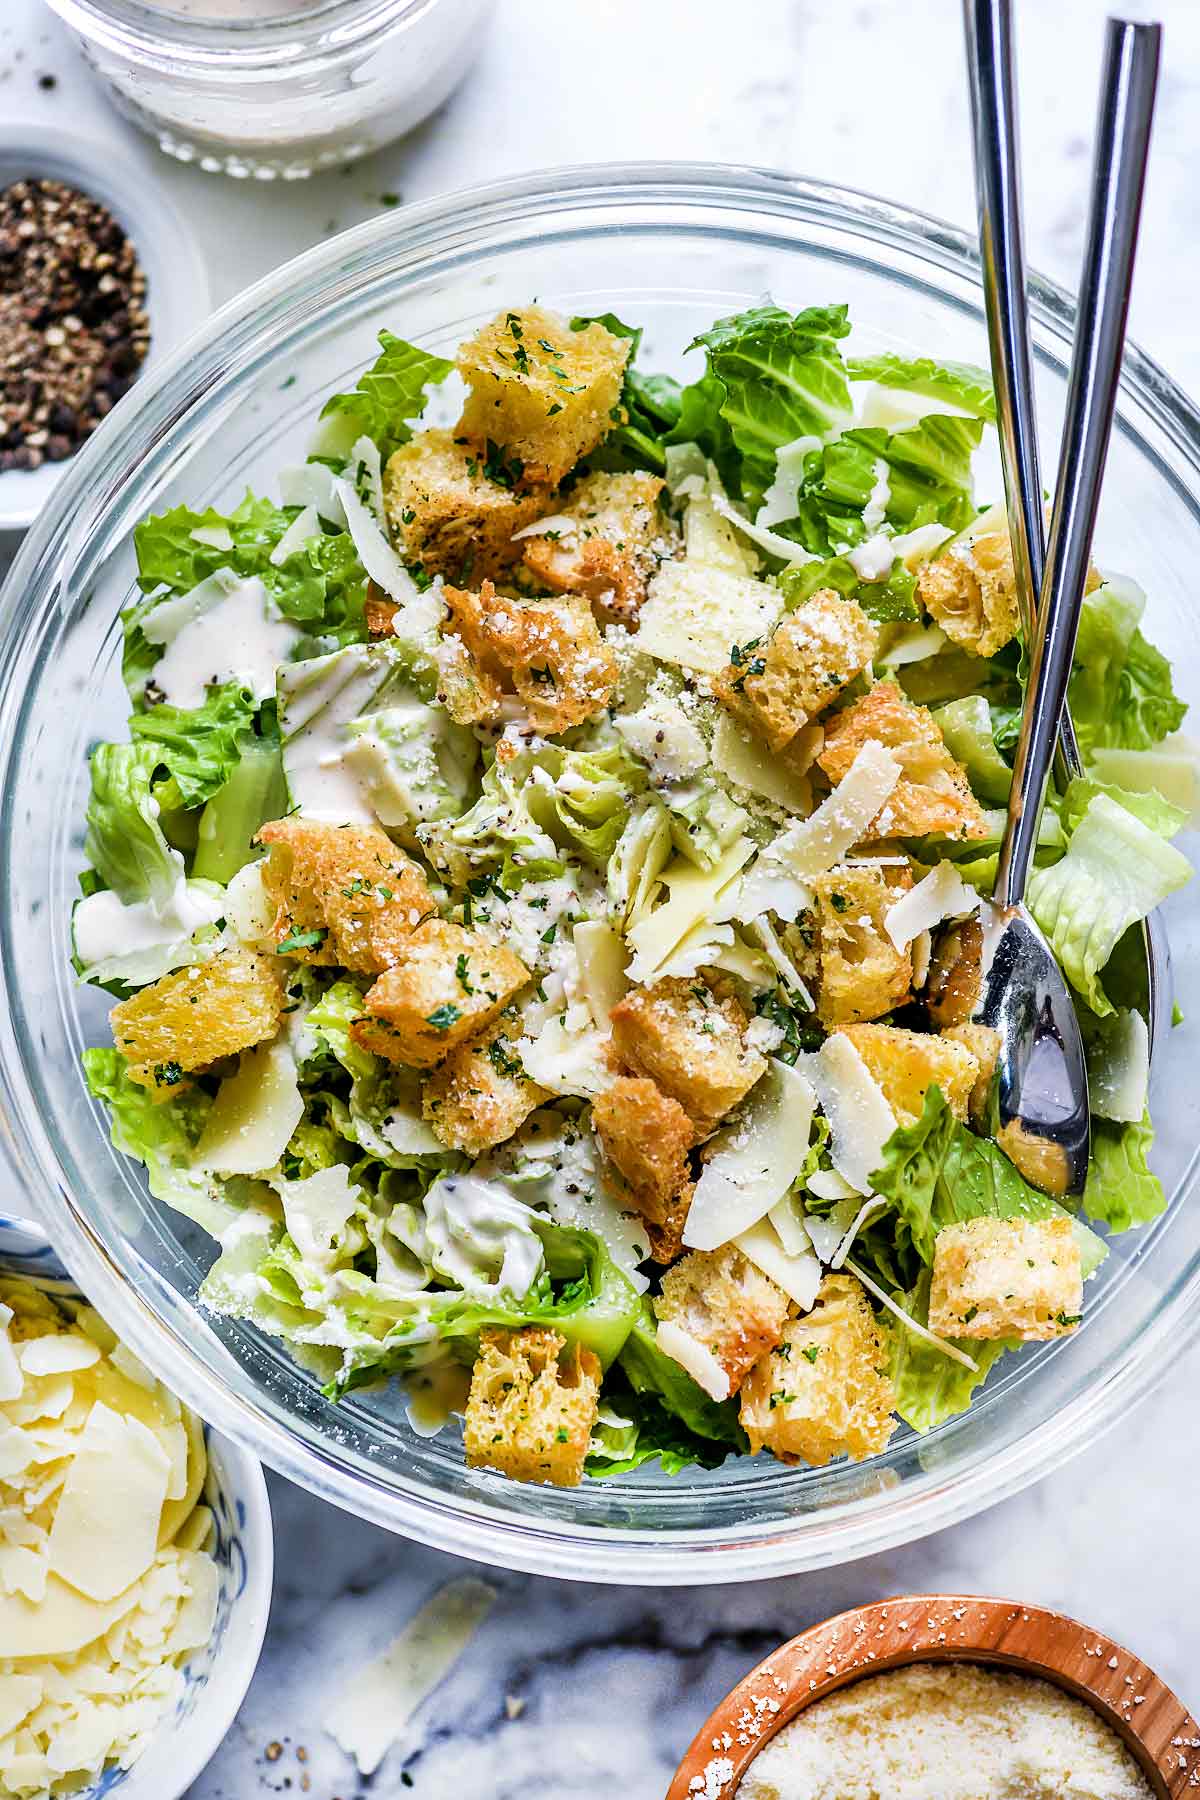 https://www.foodiecrush.com/wp-content/uploads/2019/09/Caesar-Salad-foodiecrush.com-017.jpg